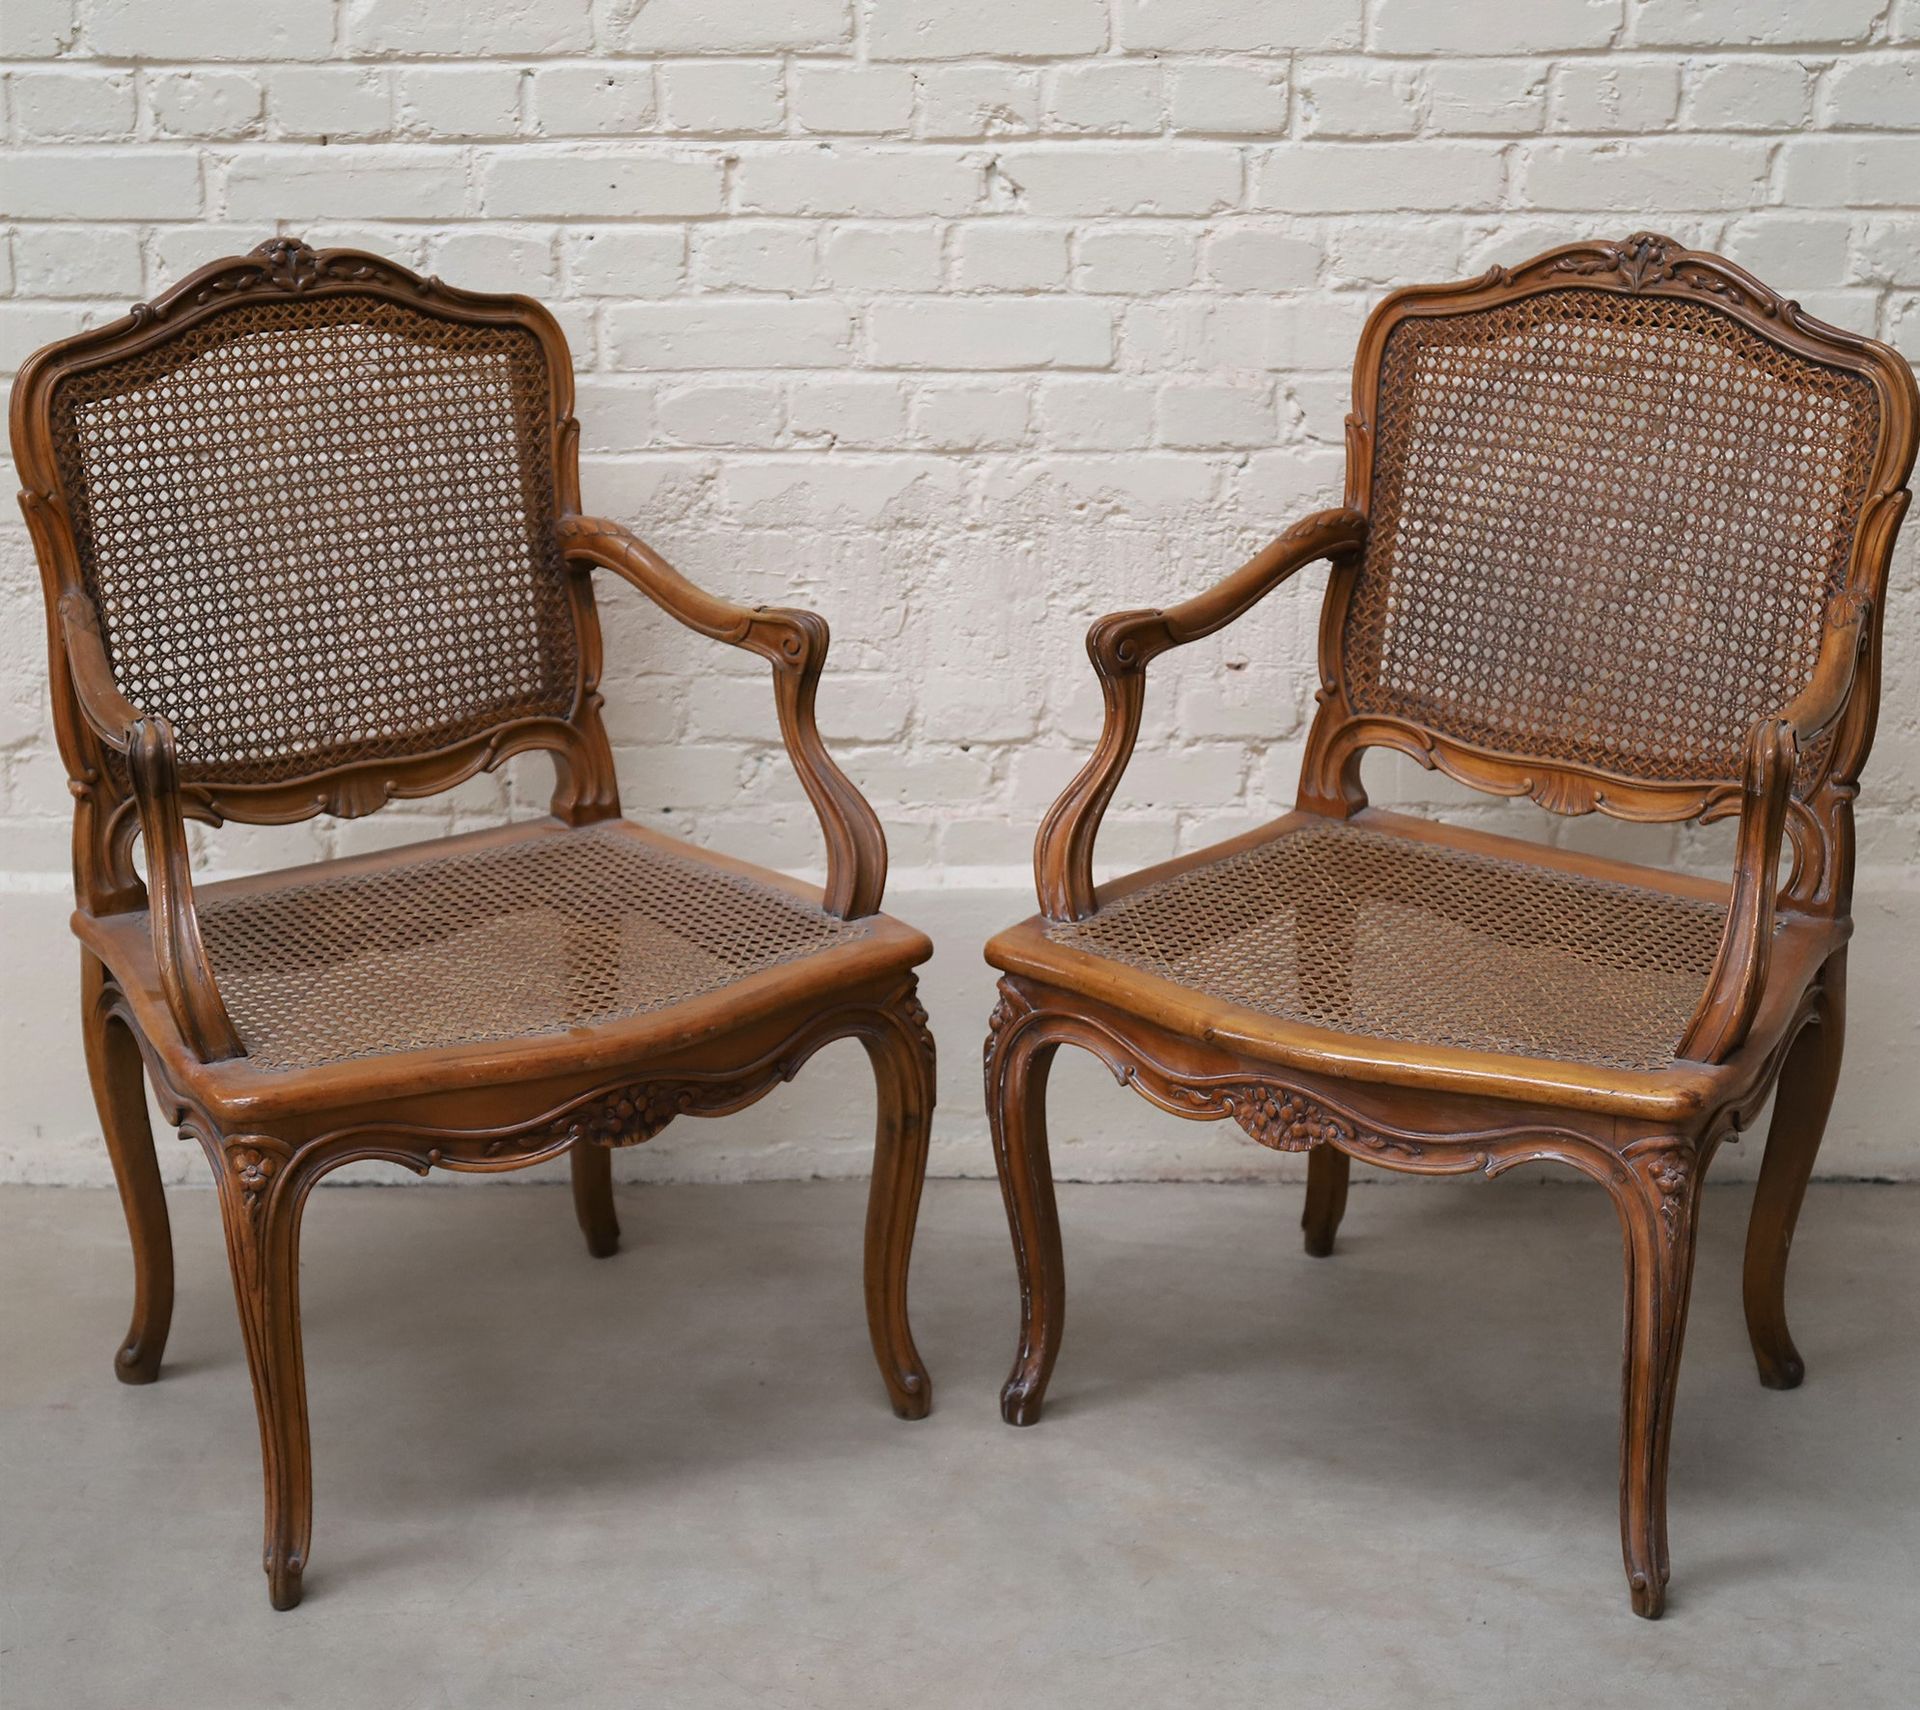 Null 一对轻型木制罐头椅，20世纪初

雕刻的花和叶子的装饰

直背、扶手和弧形腿

96.5 x 63.5 x 58.5厘米

使用和维护的条件